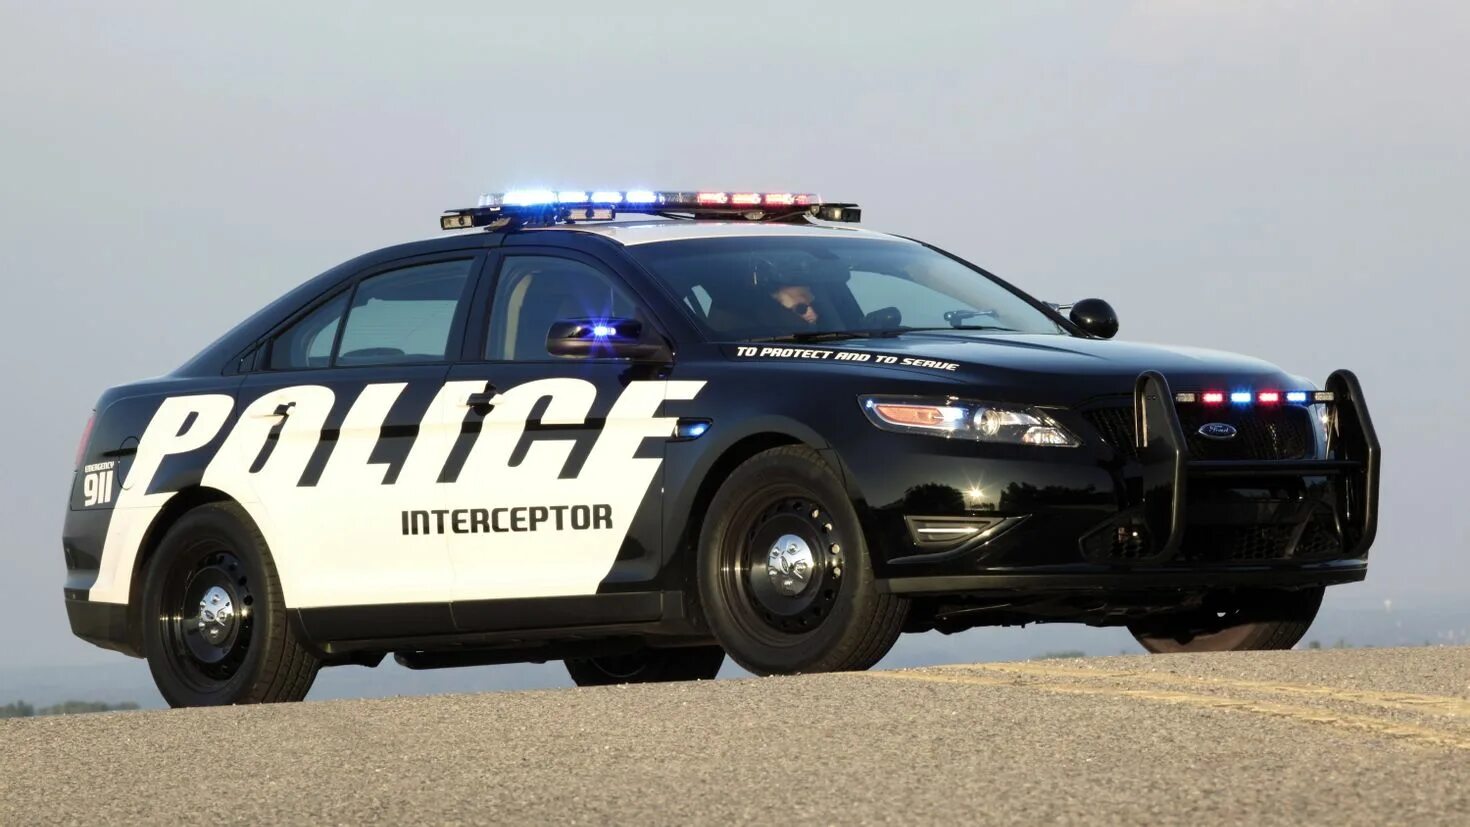 Ford Taurus Police Interceptor 2012. Ford Police Interceptor. Ford Taurus Police Interceptor. Ford Taurus 2013 Police Interceptor.